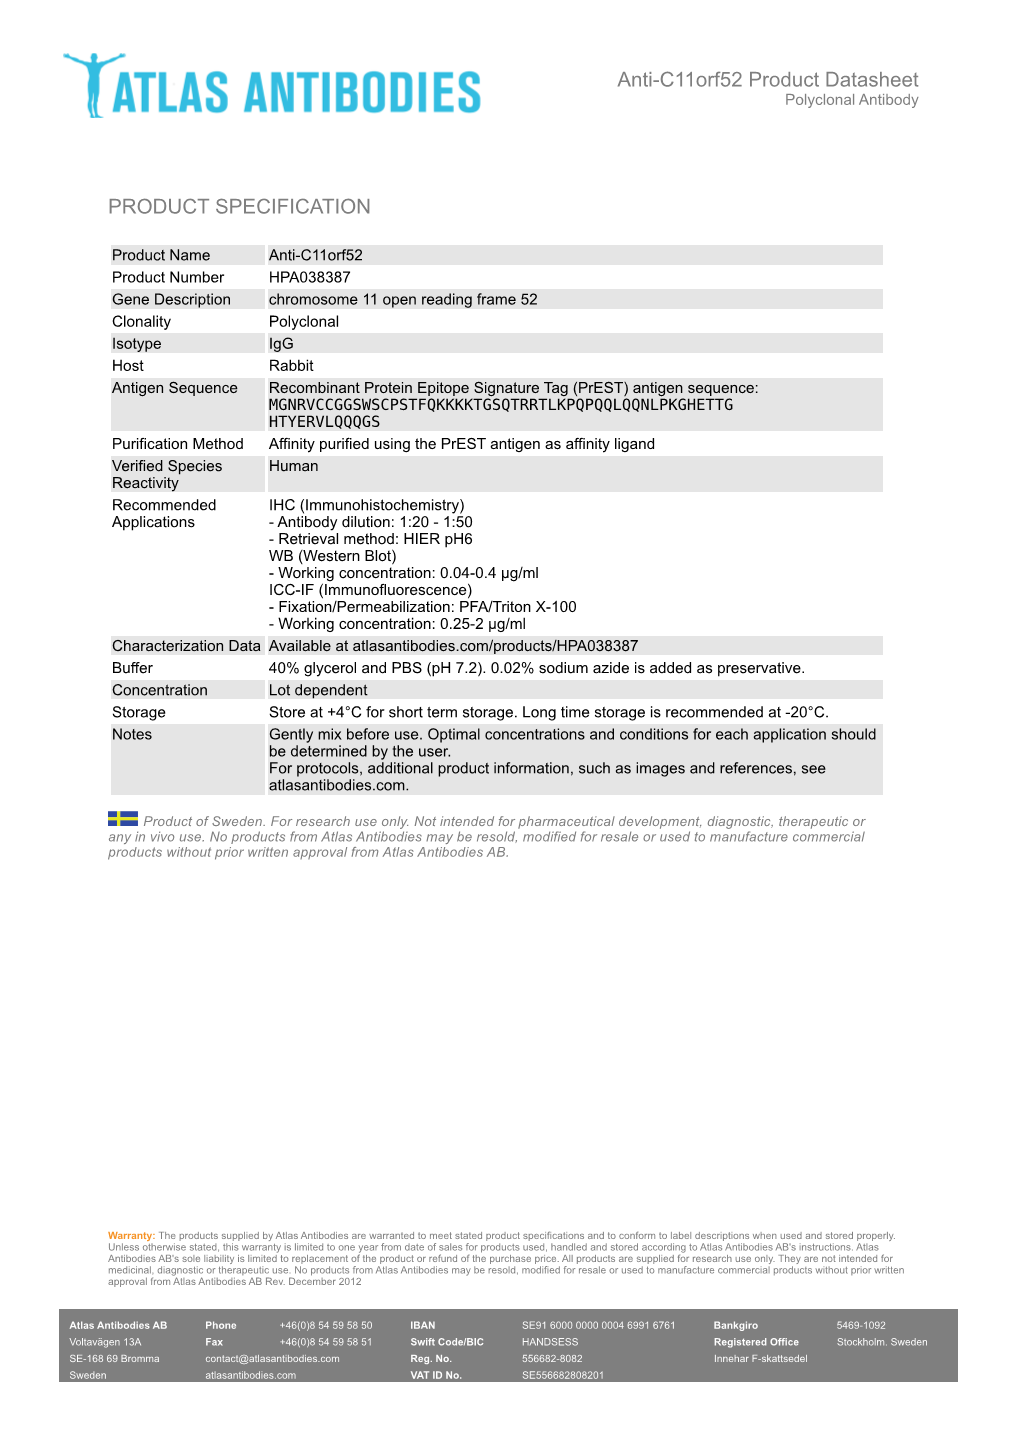 PRODUCT SPECIFICATION Anti-C11orf52 Product Datasheet